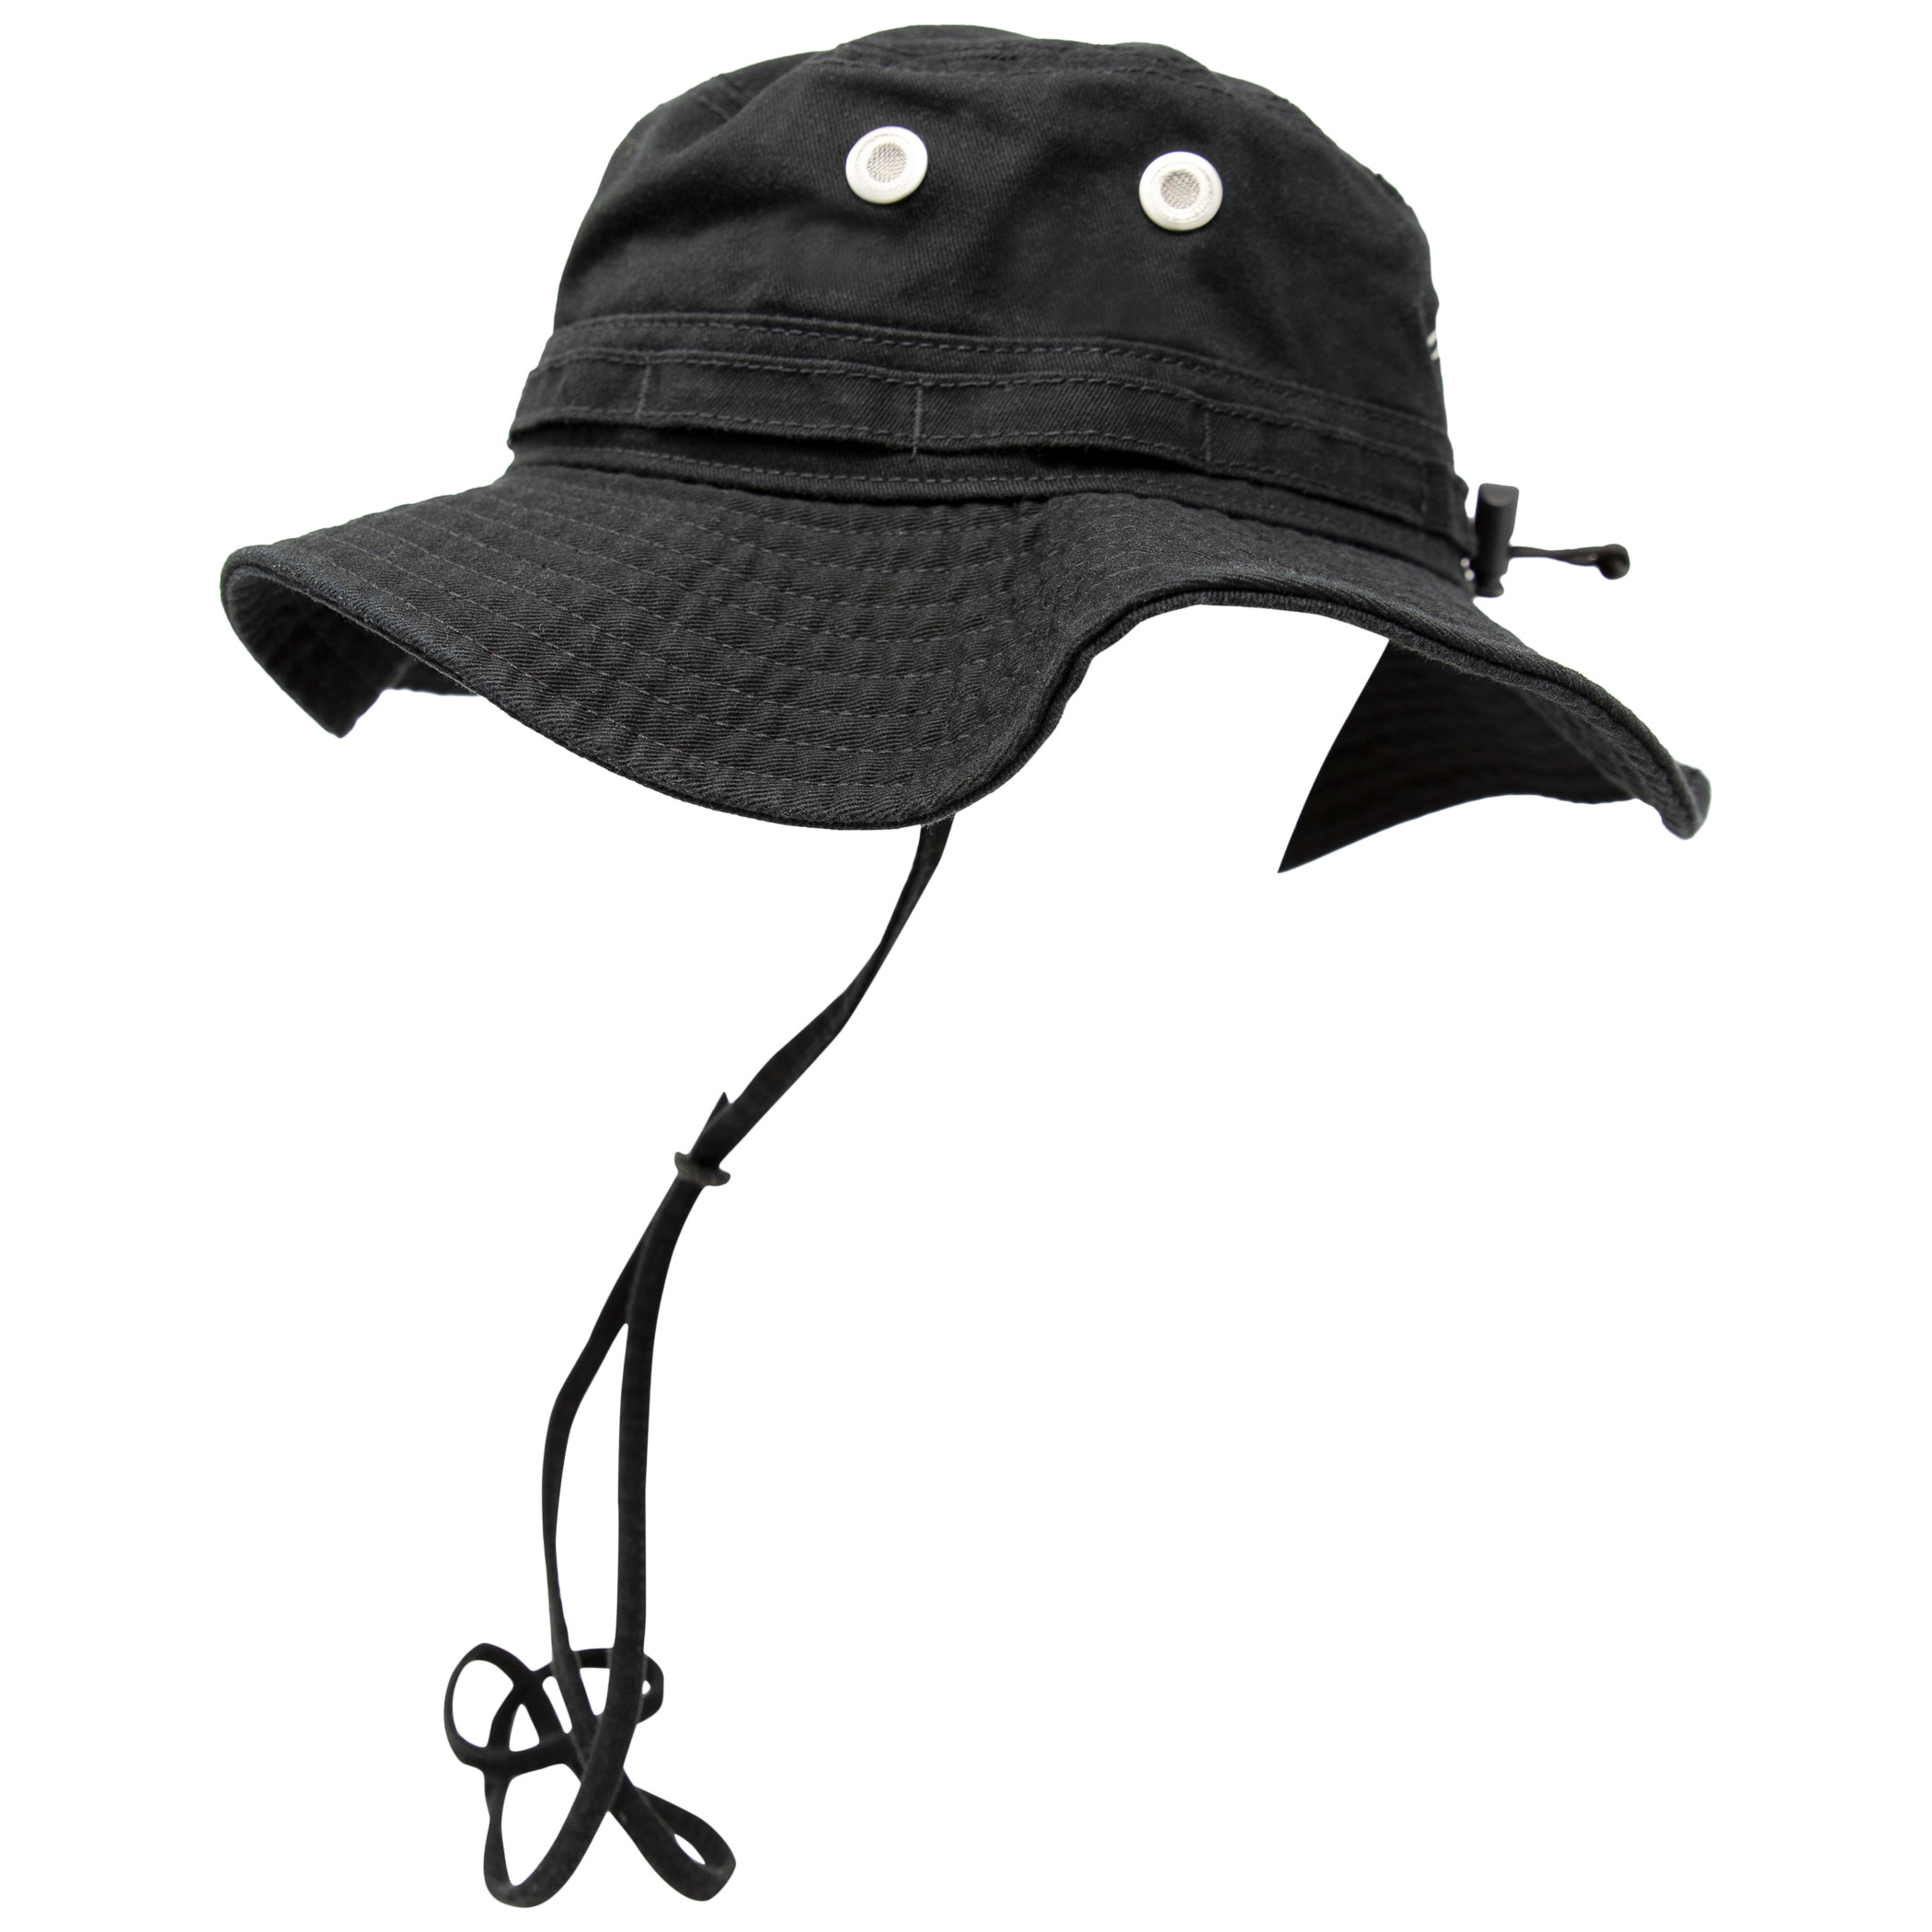 Jack Daniels Black Bucket Hat